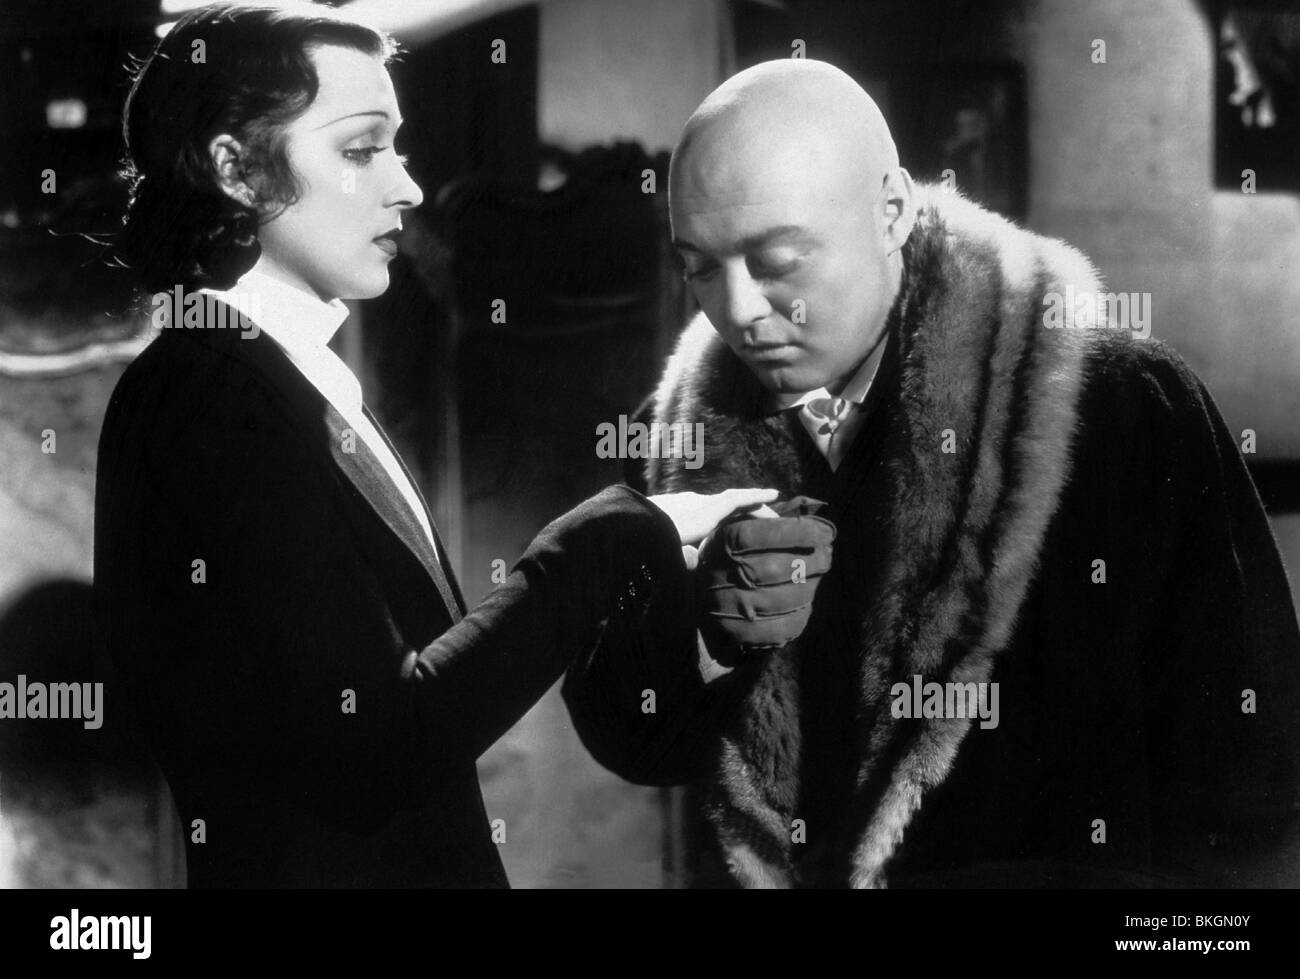 MAD LOVE (1935) FRANCES DRAKE, PETER LORRE MDLV 007 Stockfoto